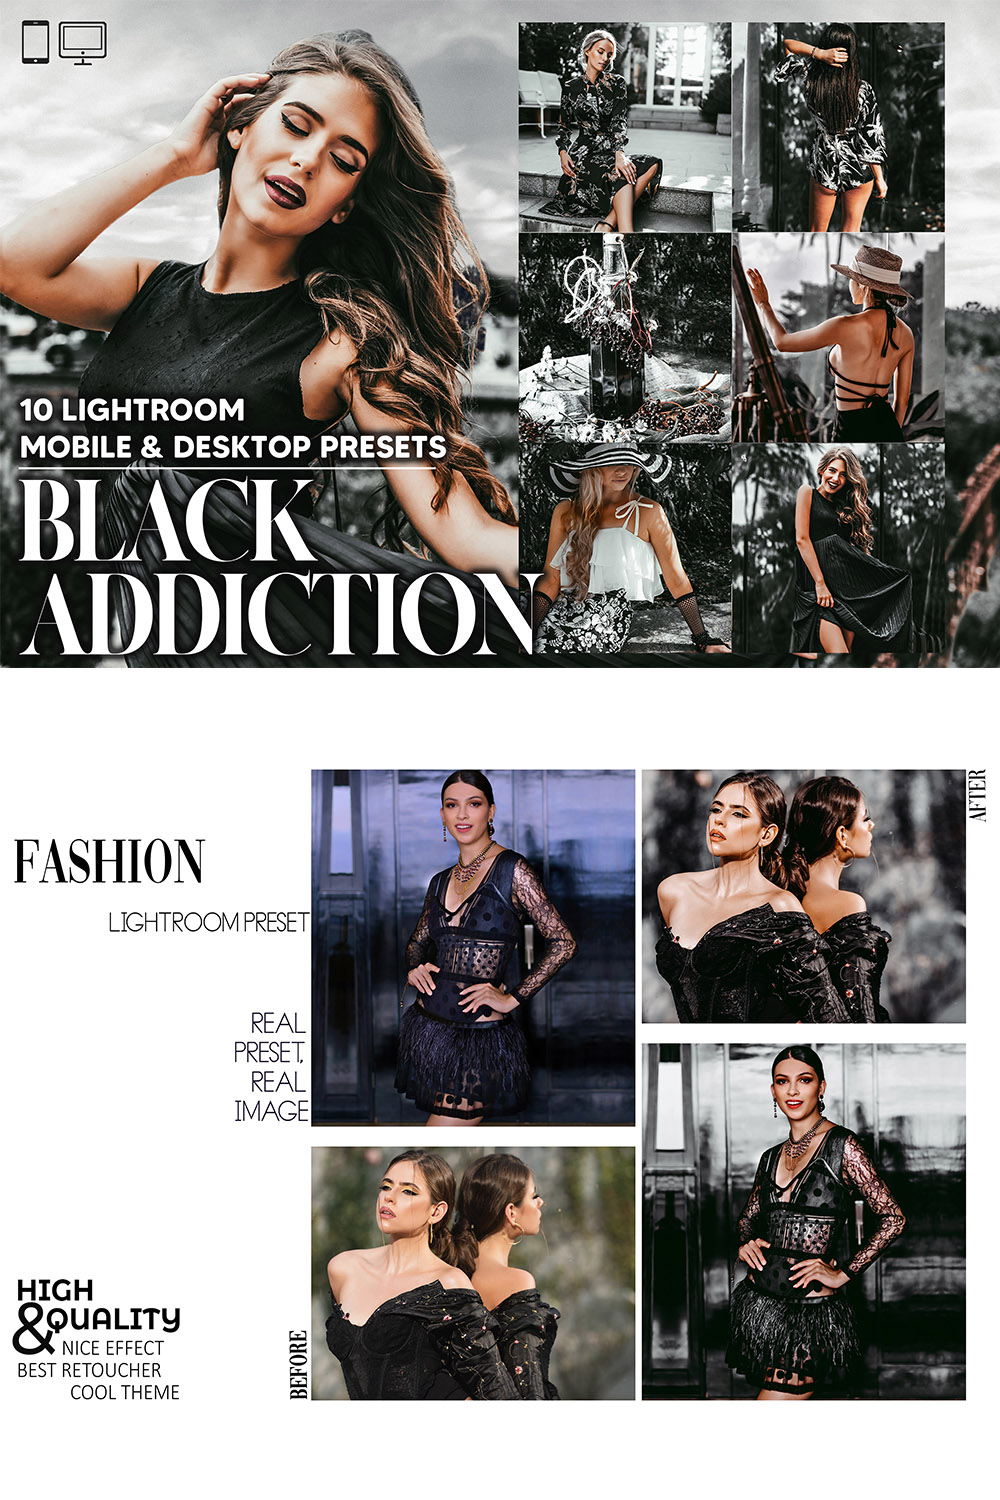 10 Black Addiction Lightroom Presets, Summer Dark Mobile Preset, Luxury Desktop, Lifestyle Portrait Theme Instagram LR Filter DNG Moody Chic pinterest preview image.